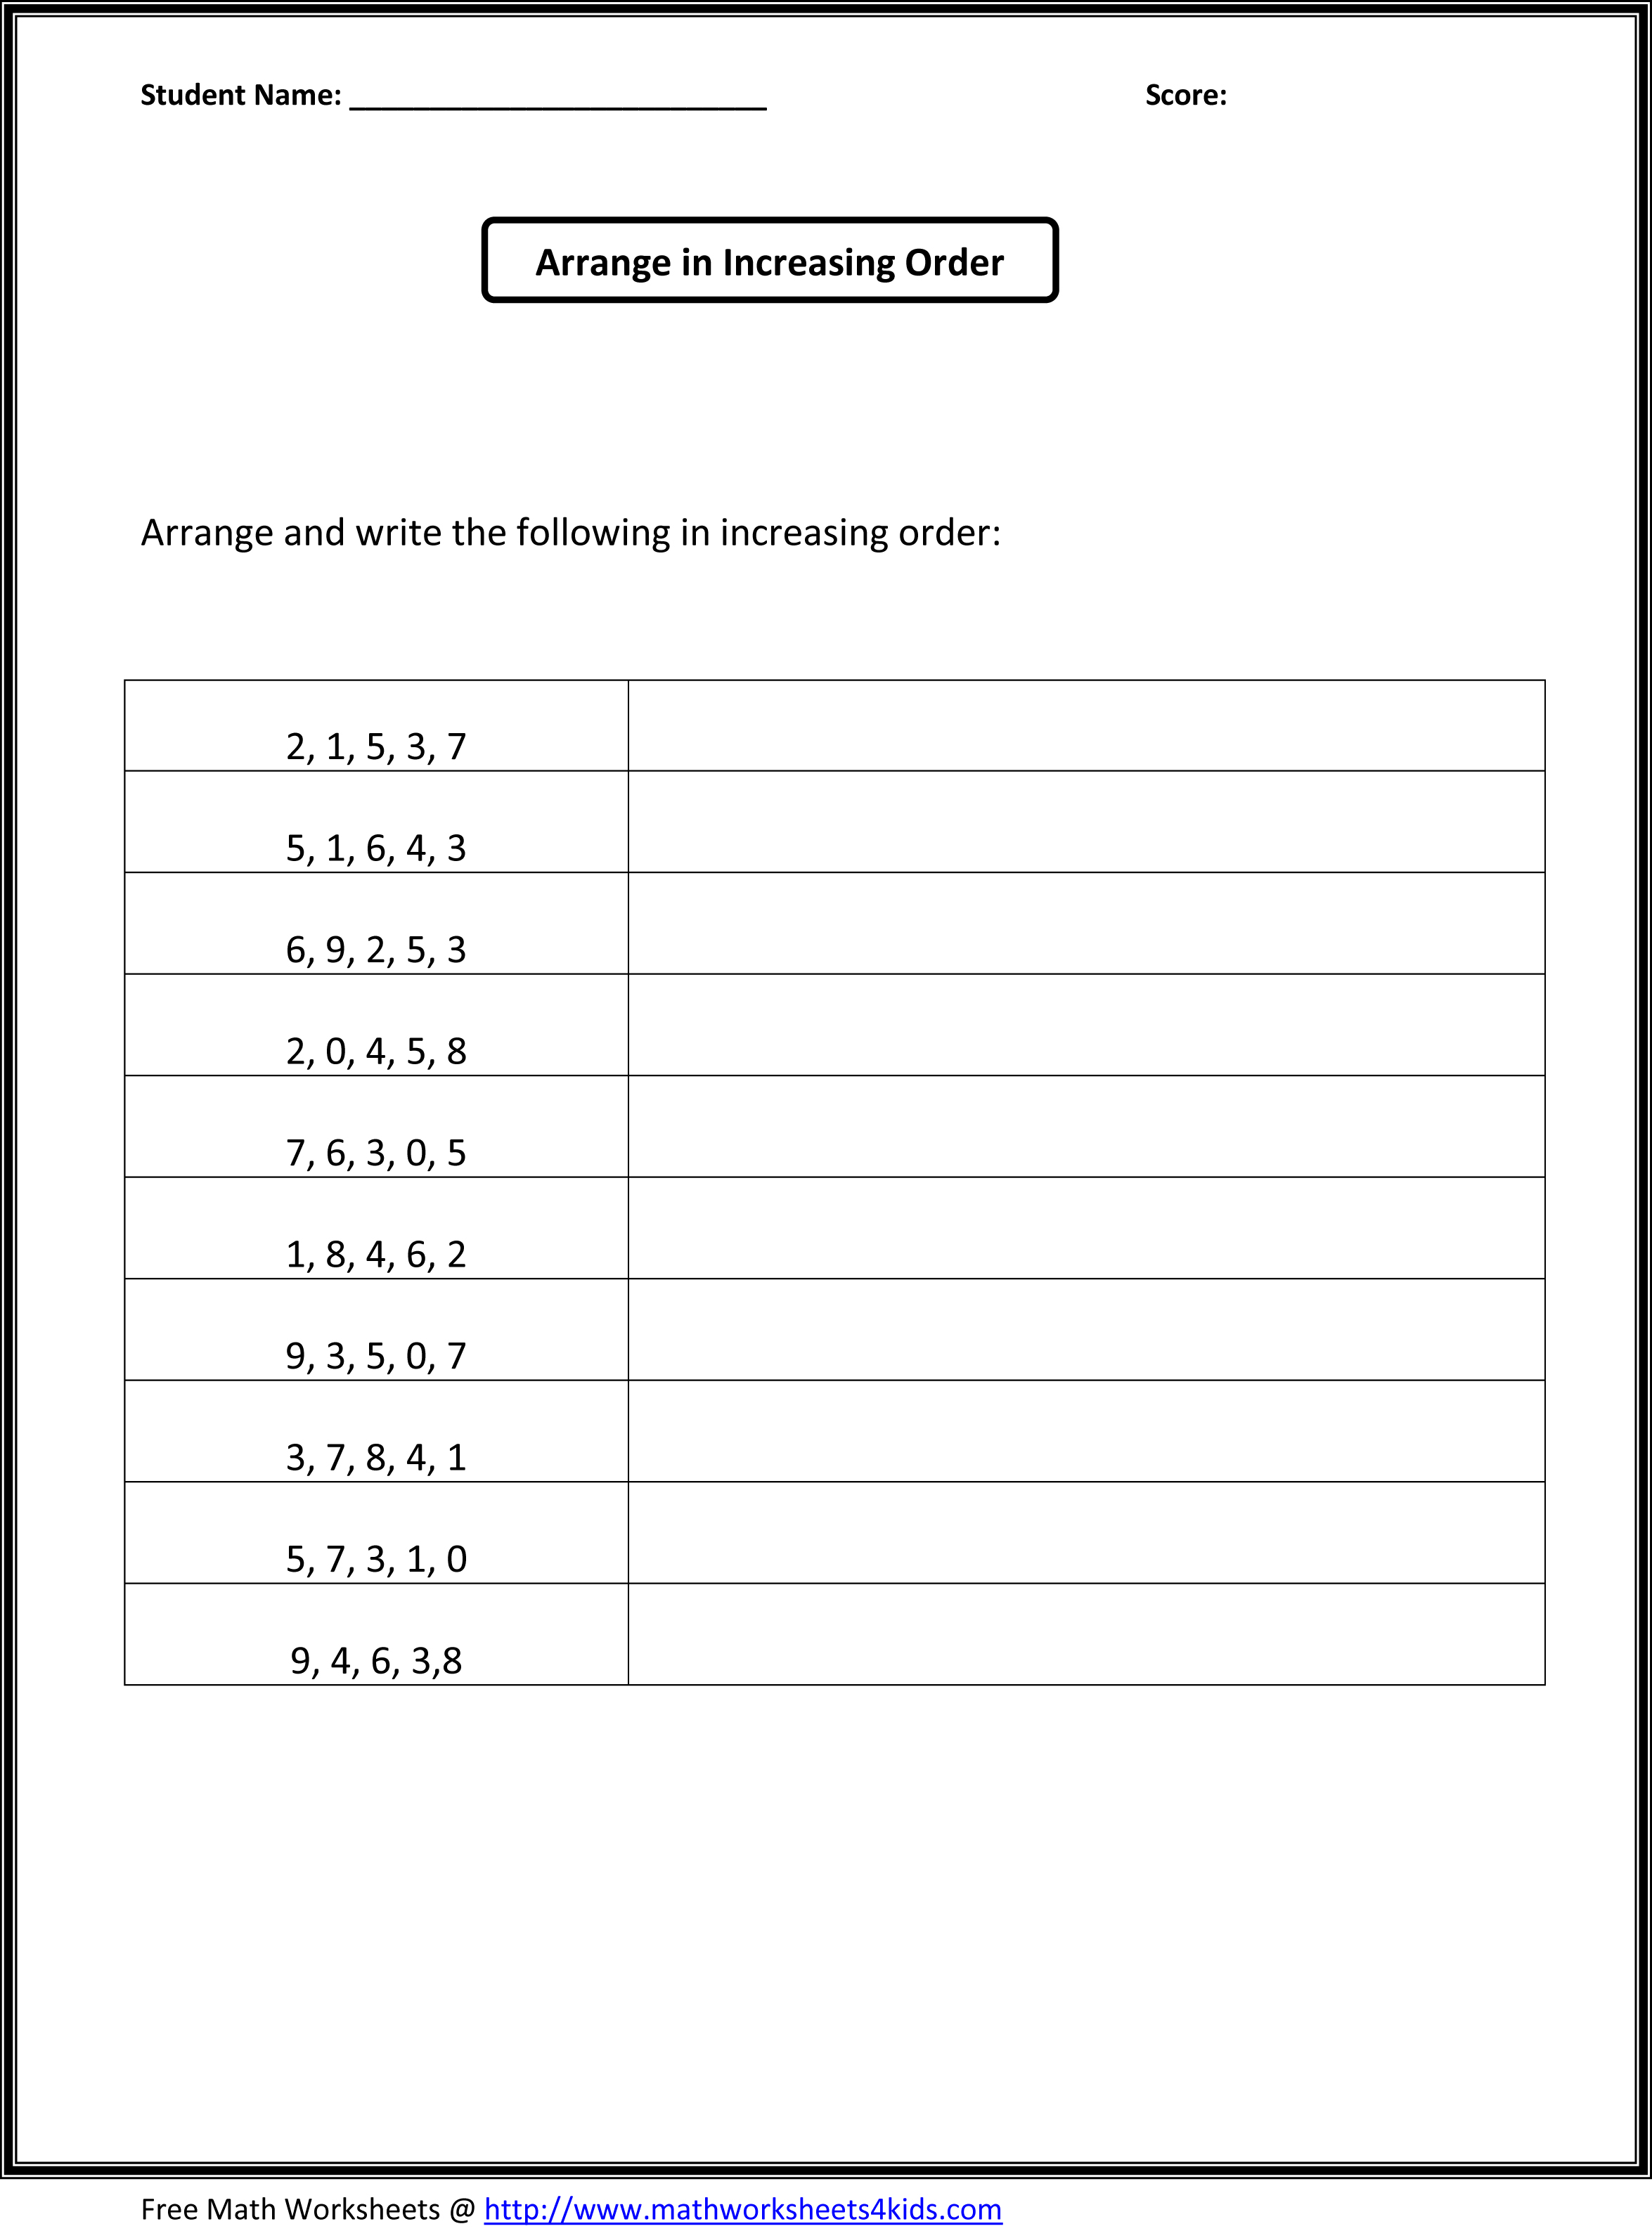 Grade 1 Math Worksheets Image